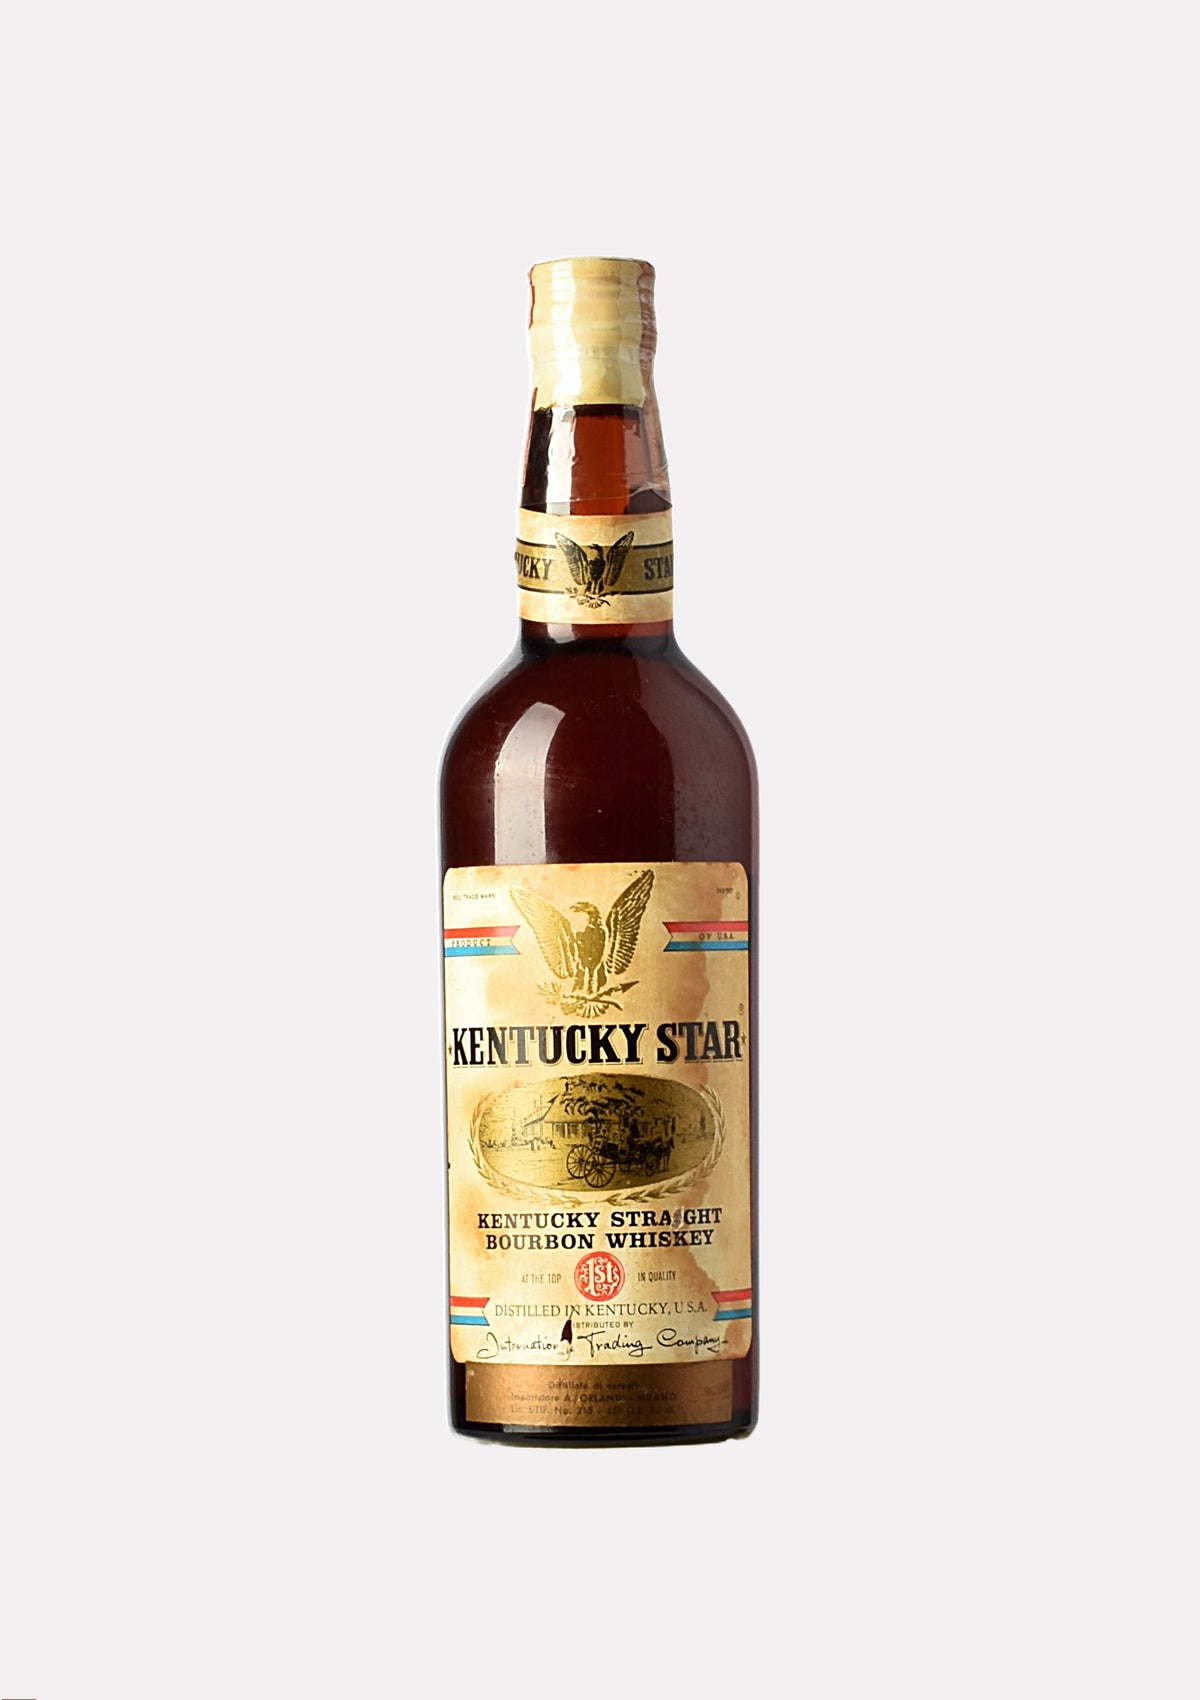 Kentucky Star Kentucky Straight Bourbon Whiskey